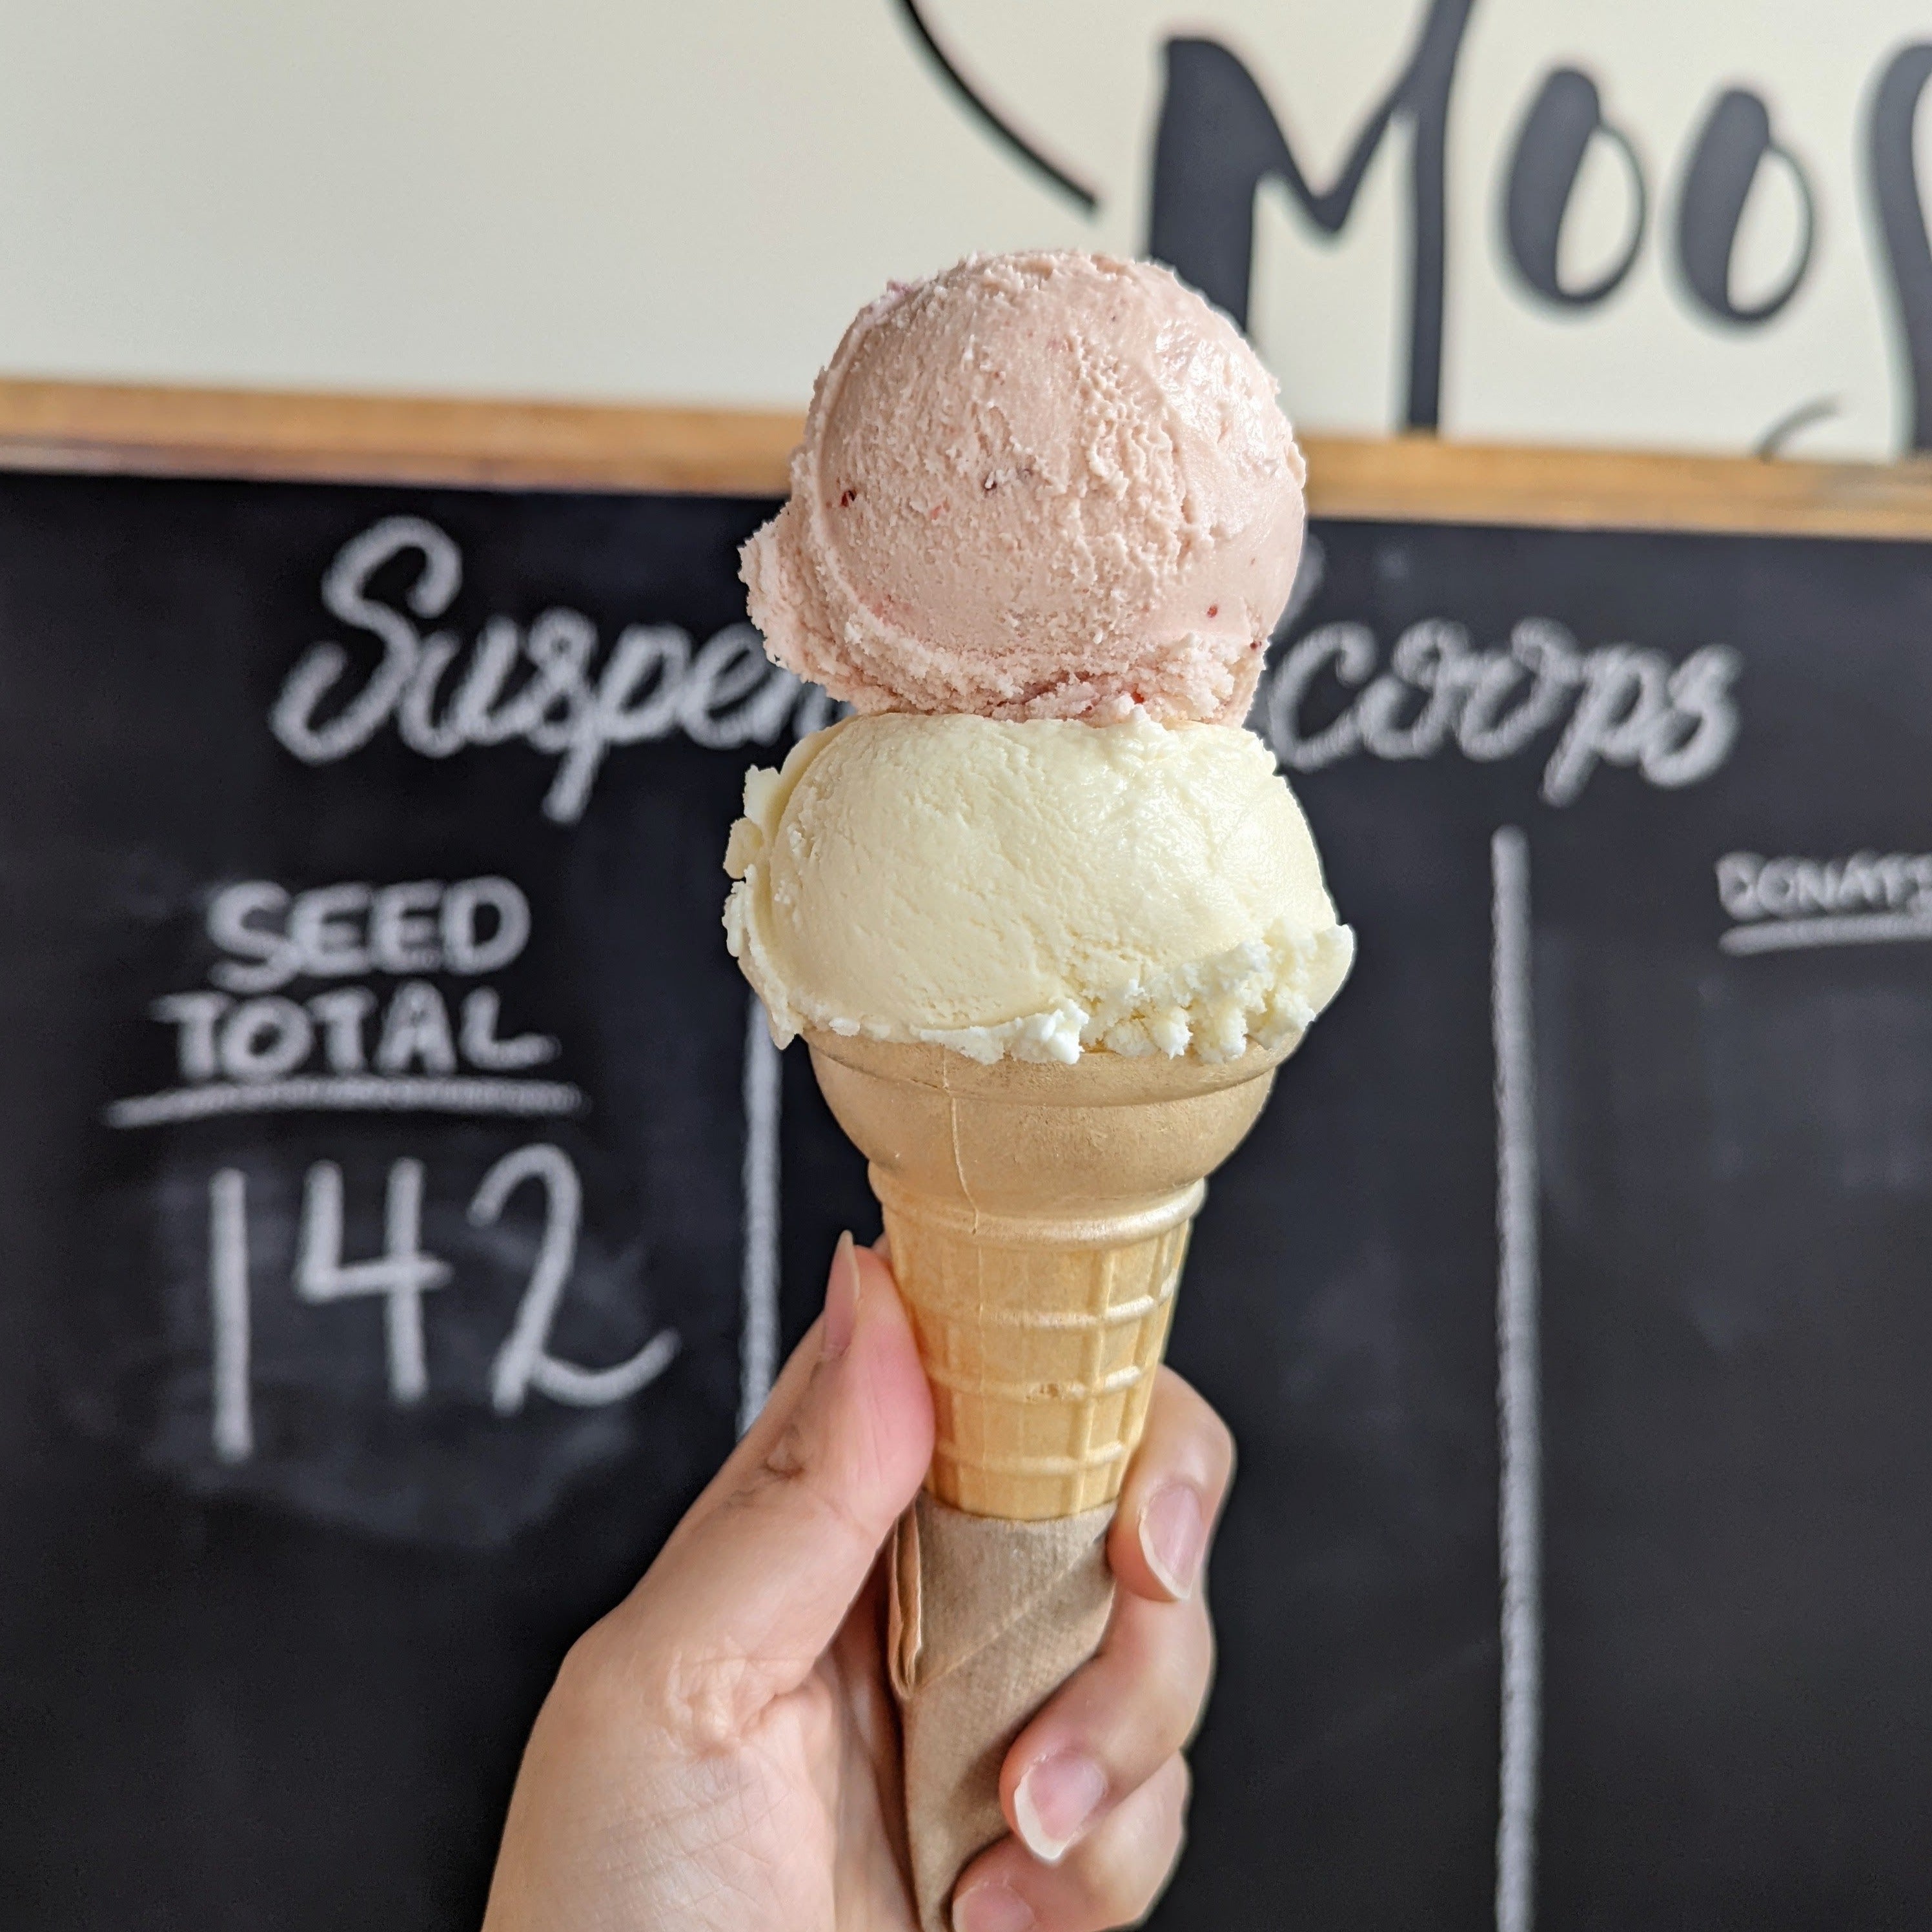 Suspended Scoop Donation - Moo Shu Ice Cream & Kitchen